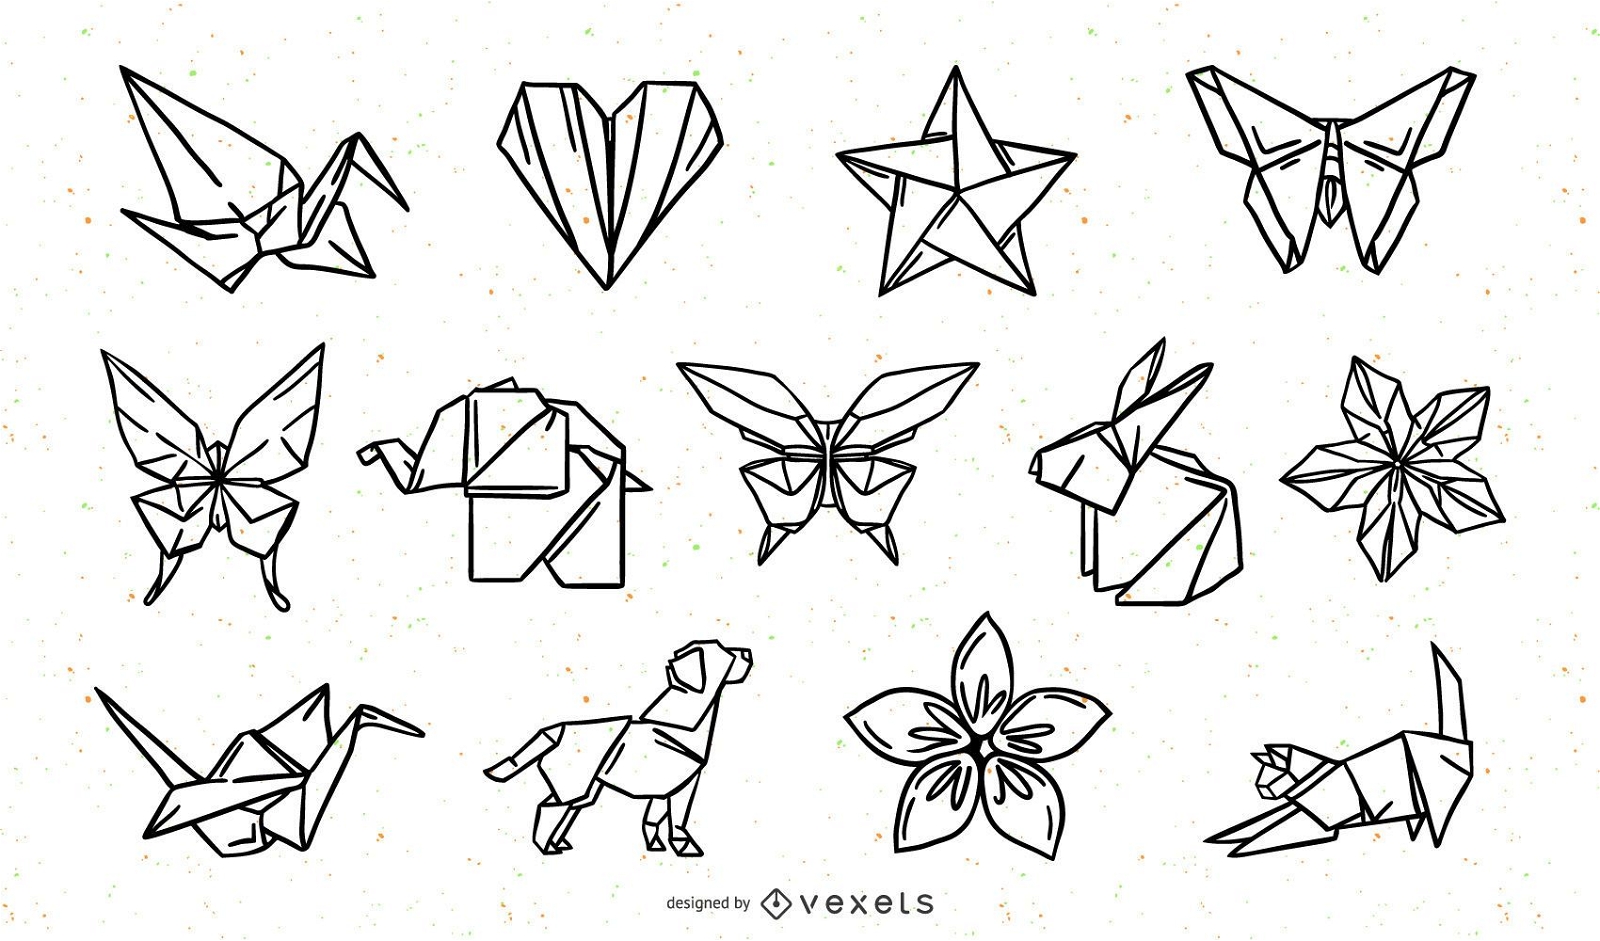 Origami Nature Elements Stroke Design Pack